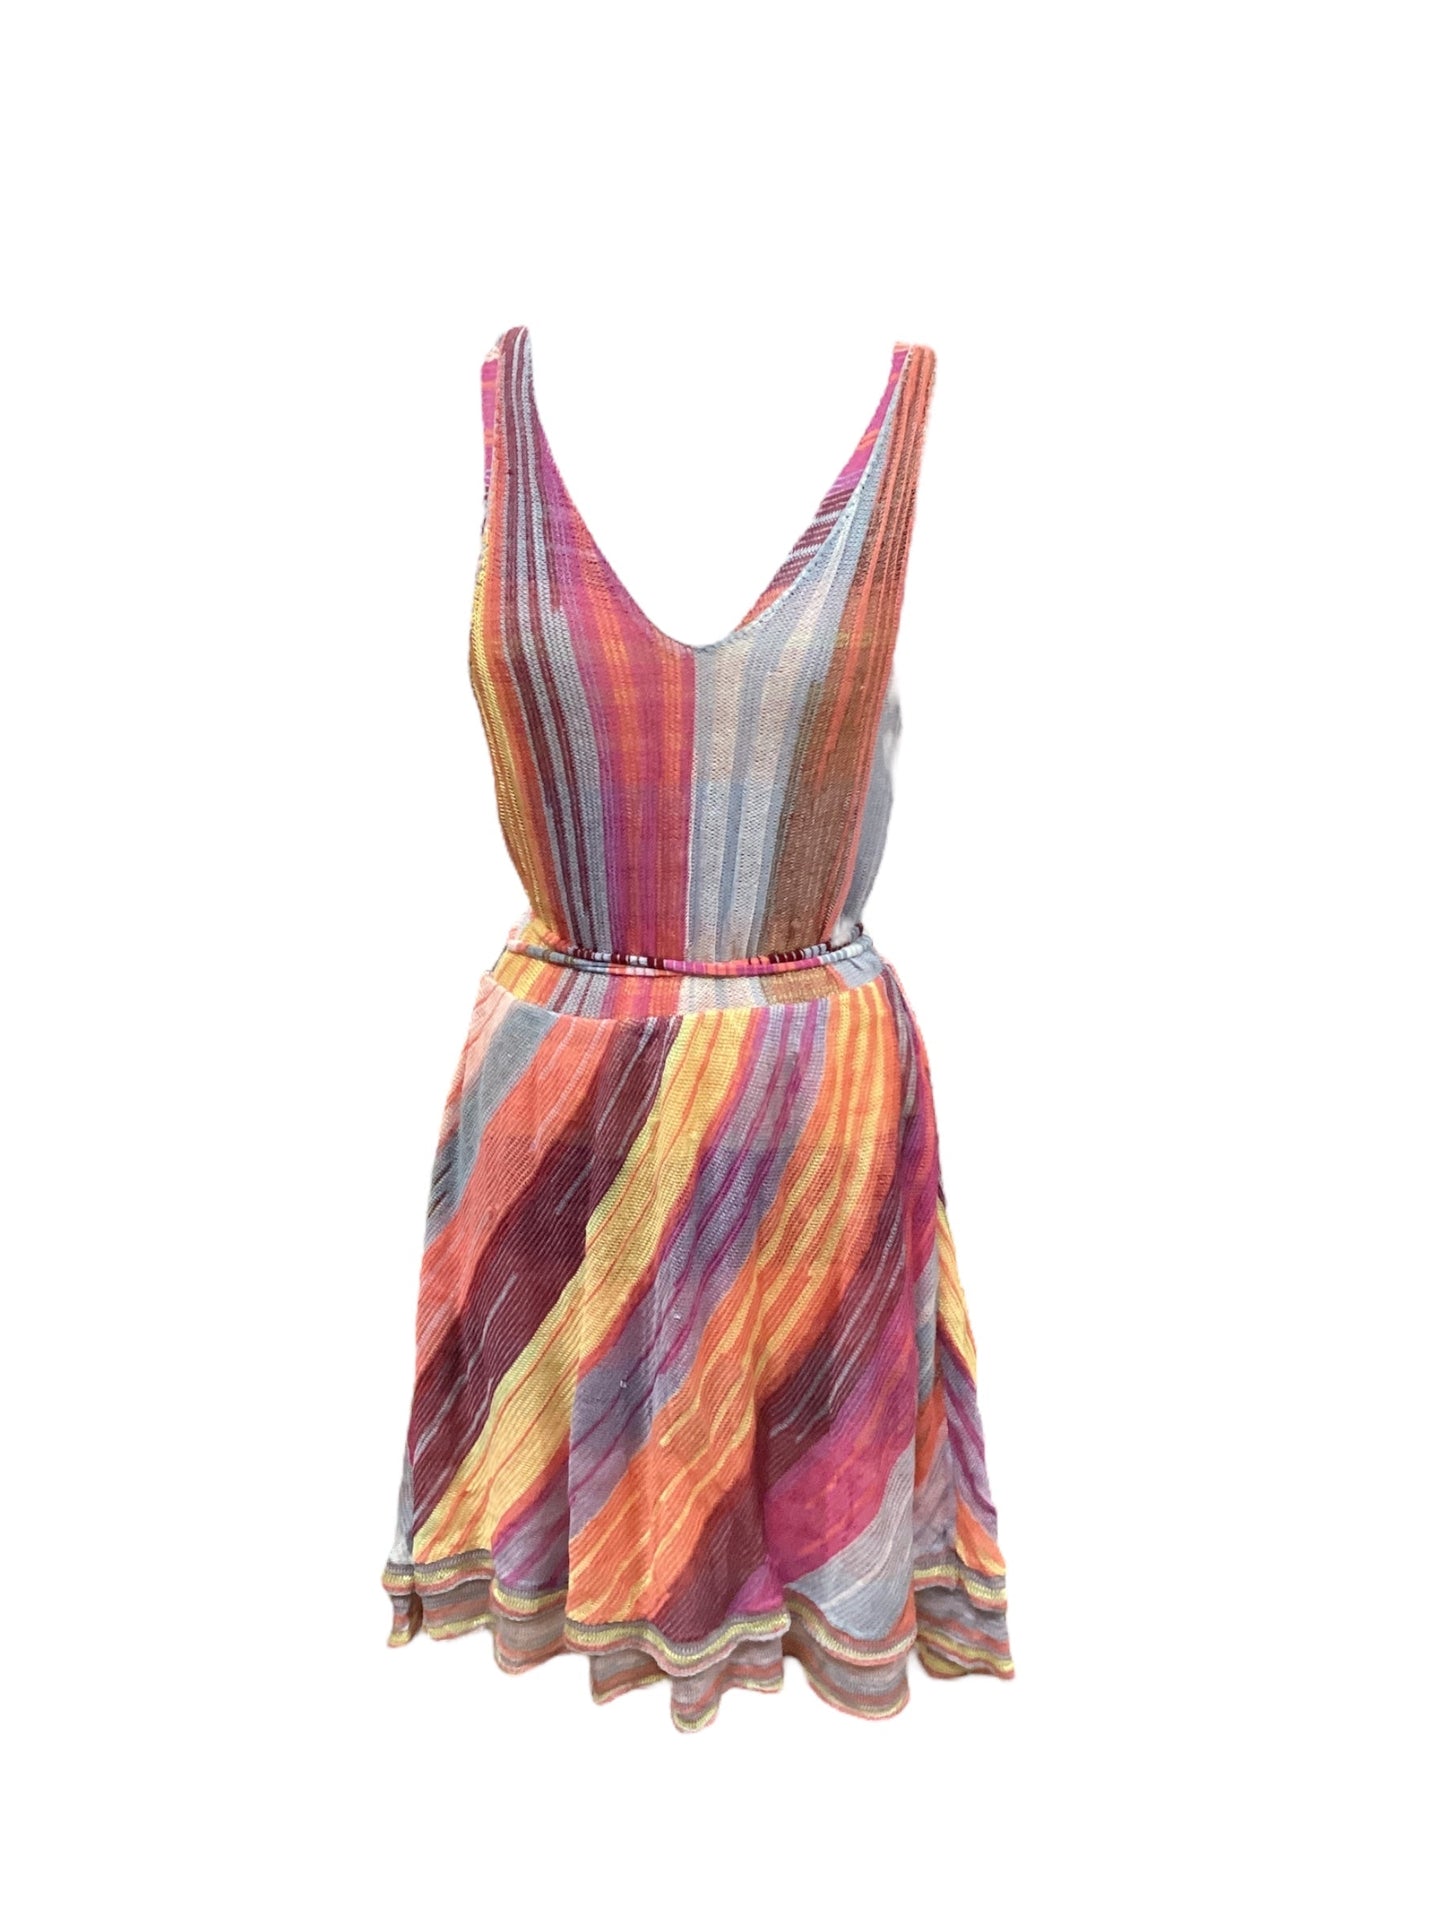 Multi-colored Dress Casual Midi Clothes Mentor, Size M